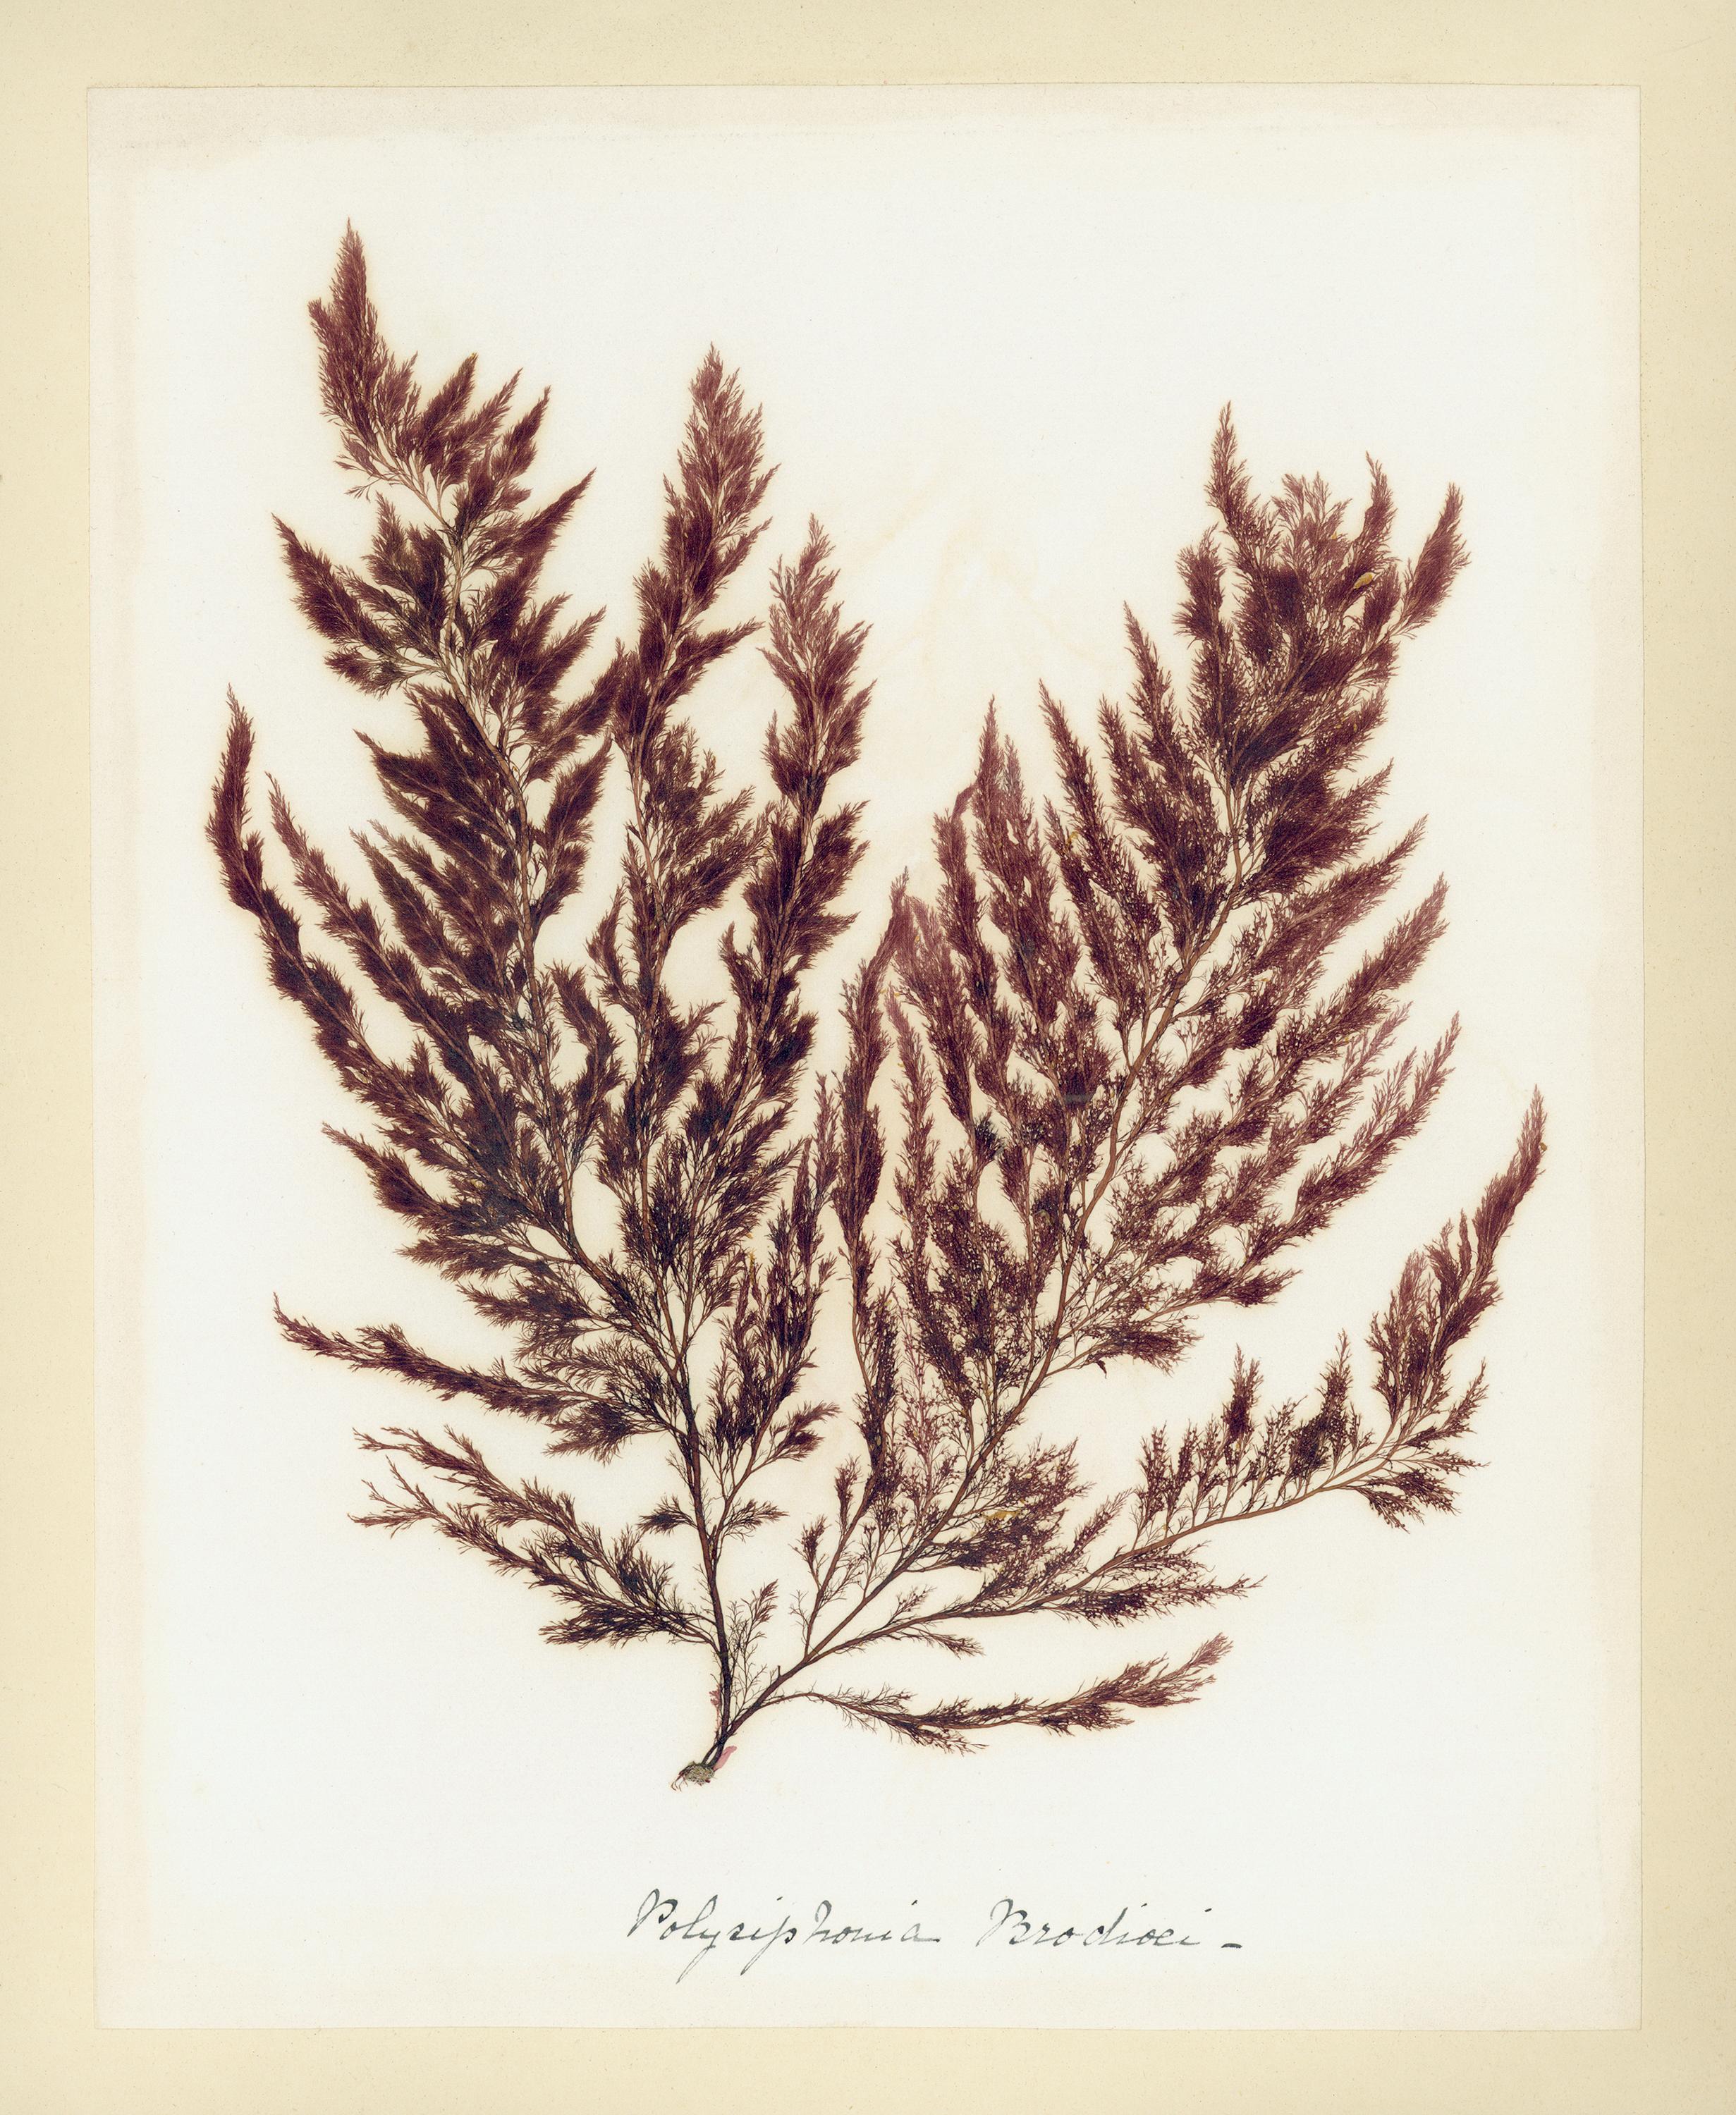 Unknown Still-Life Photograph - Seaweed Specimen, Polysiphonia Brodiei